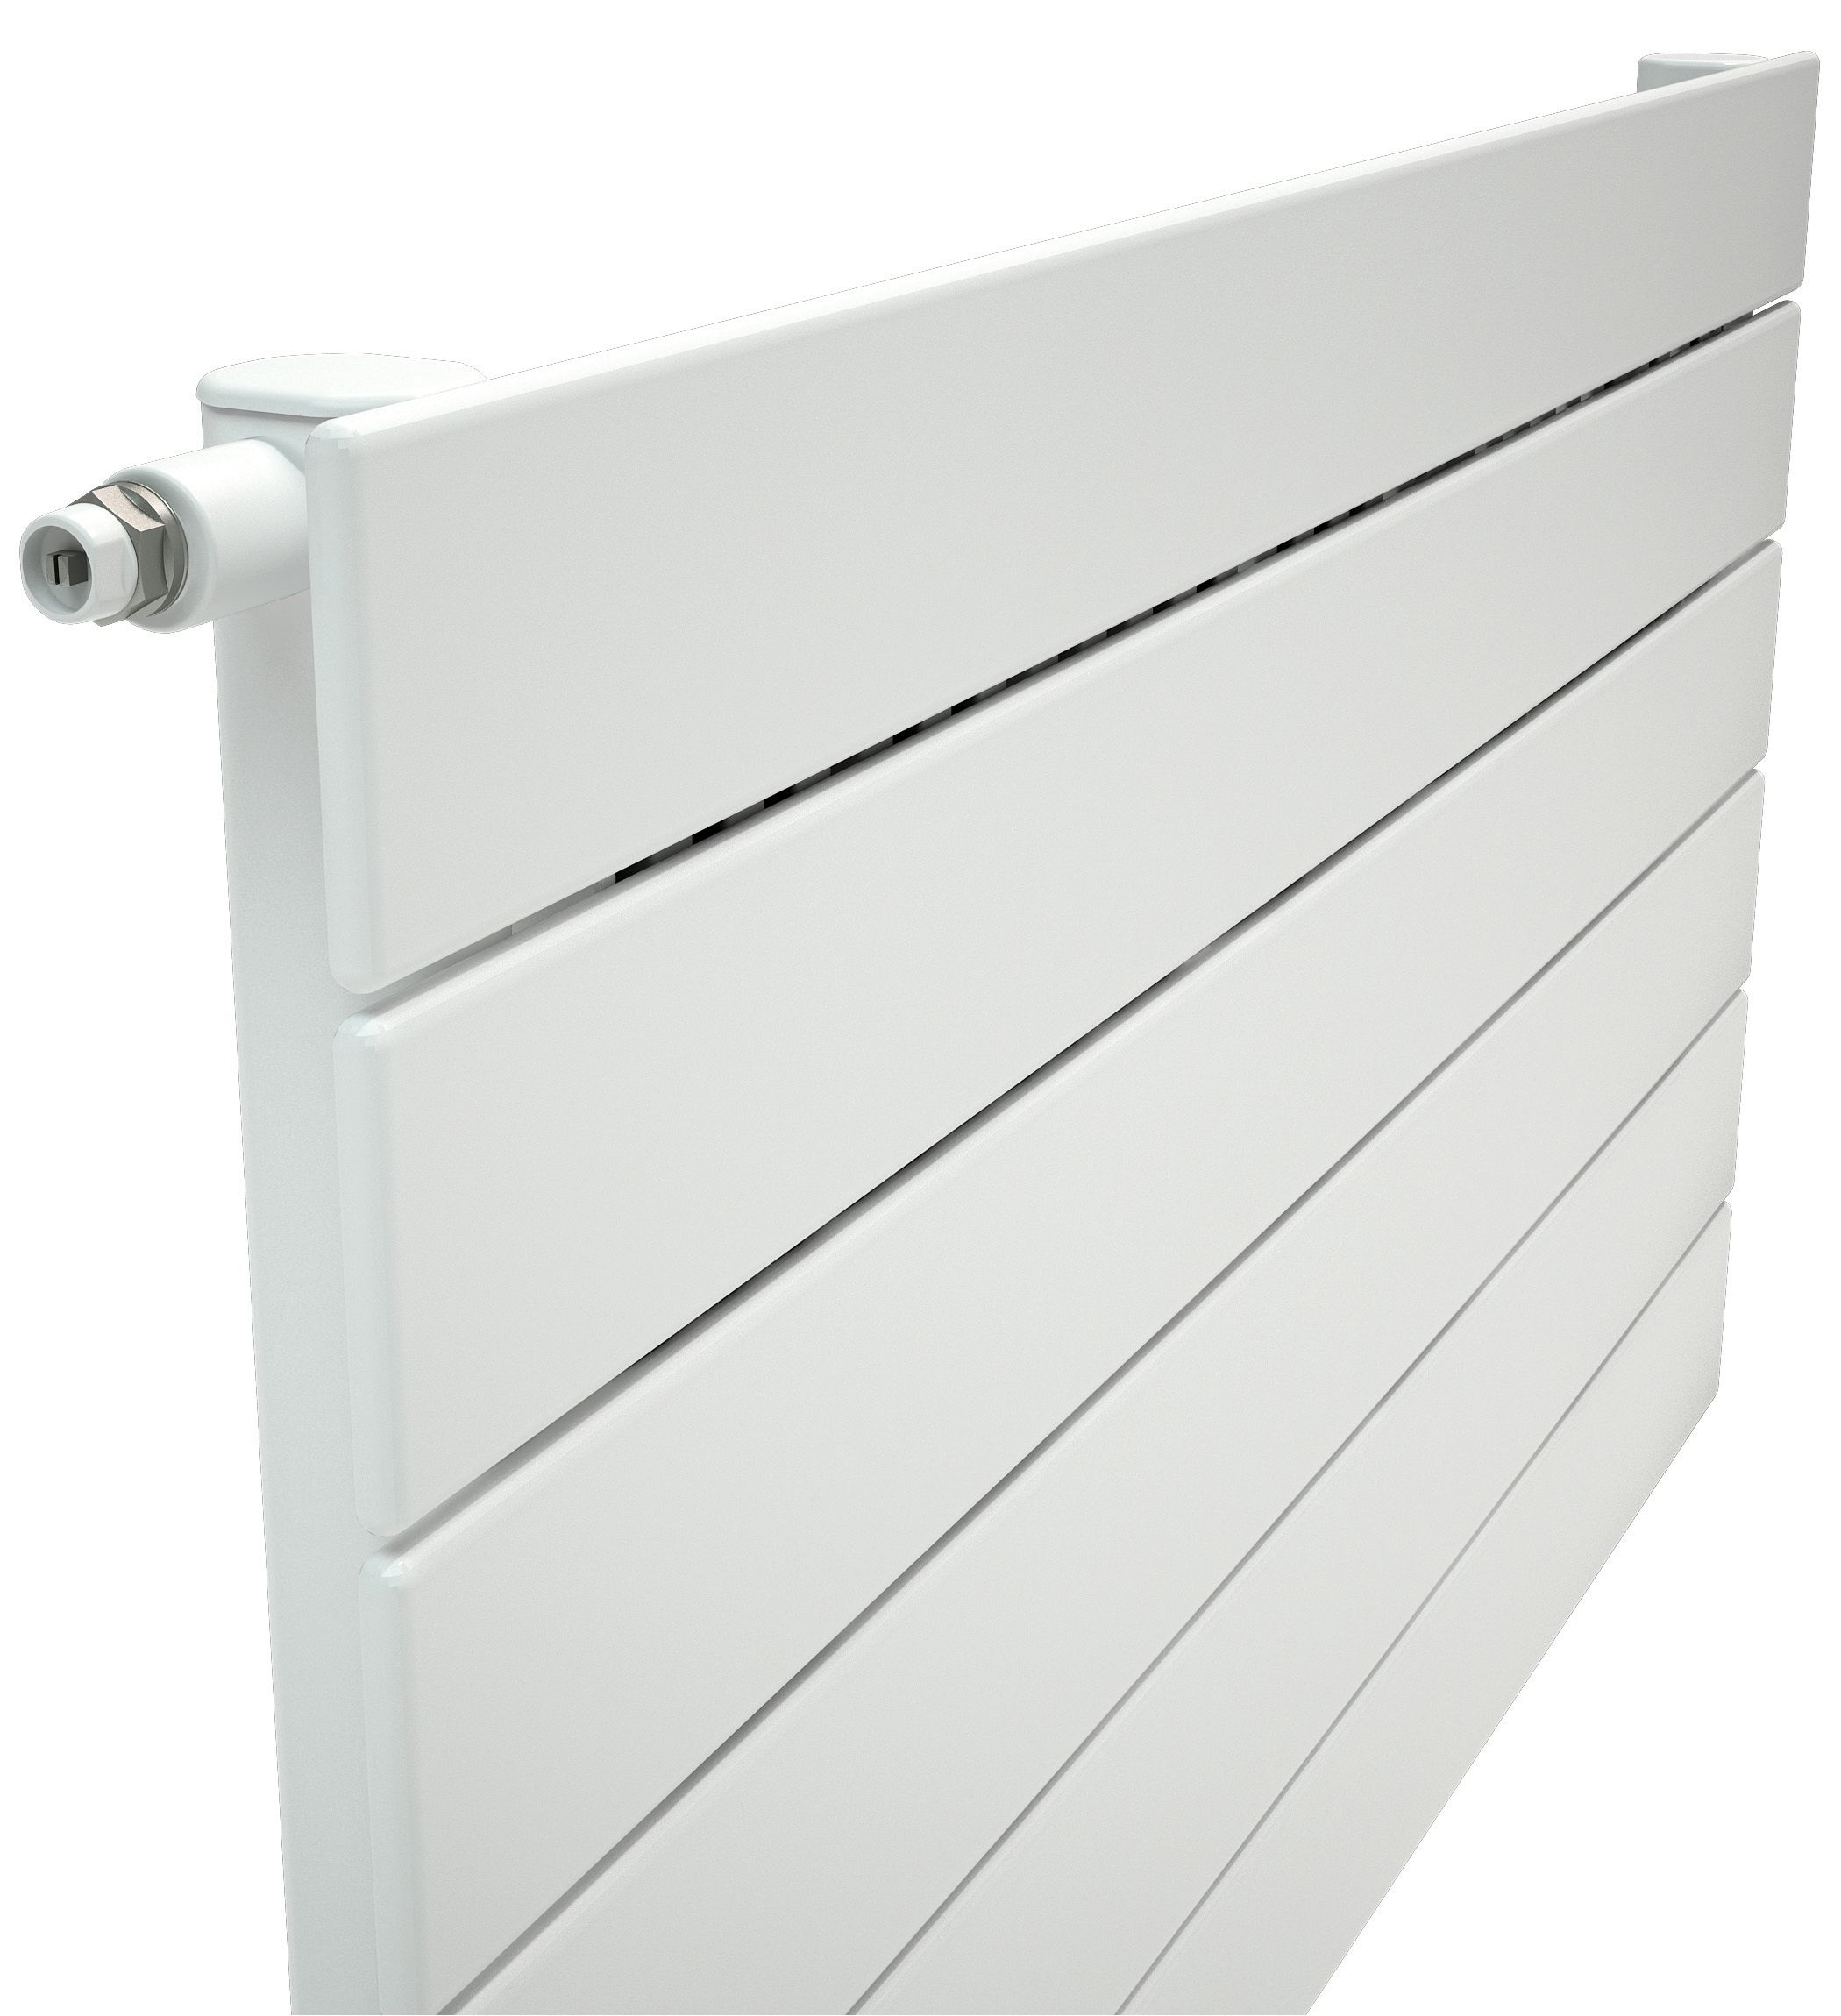 Image of Henrad Verona Single Panel Designer Radiator - White 592 x 700 mm